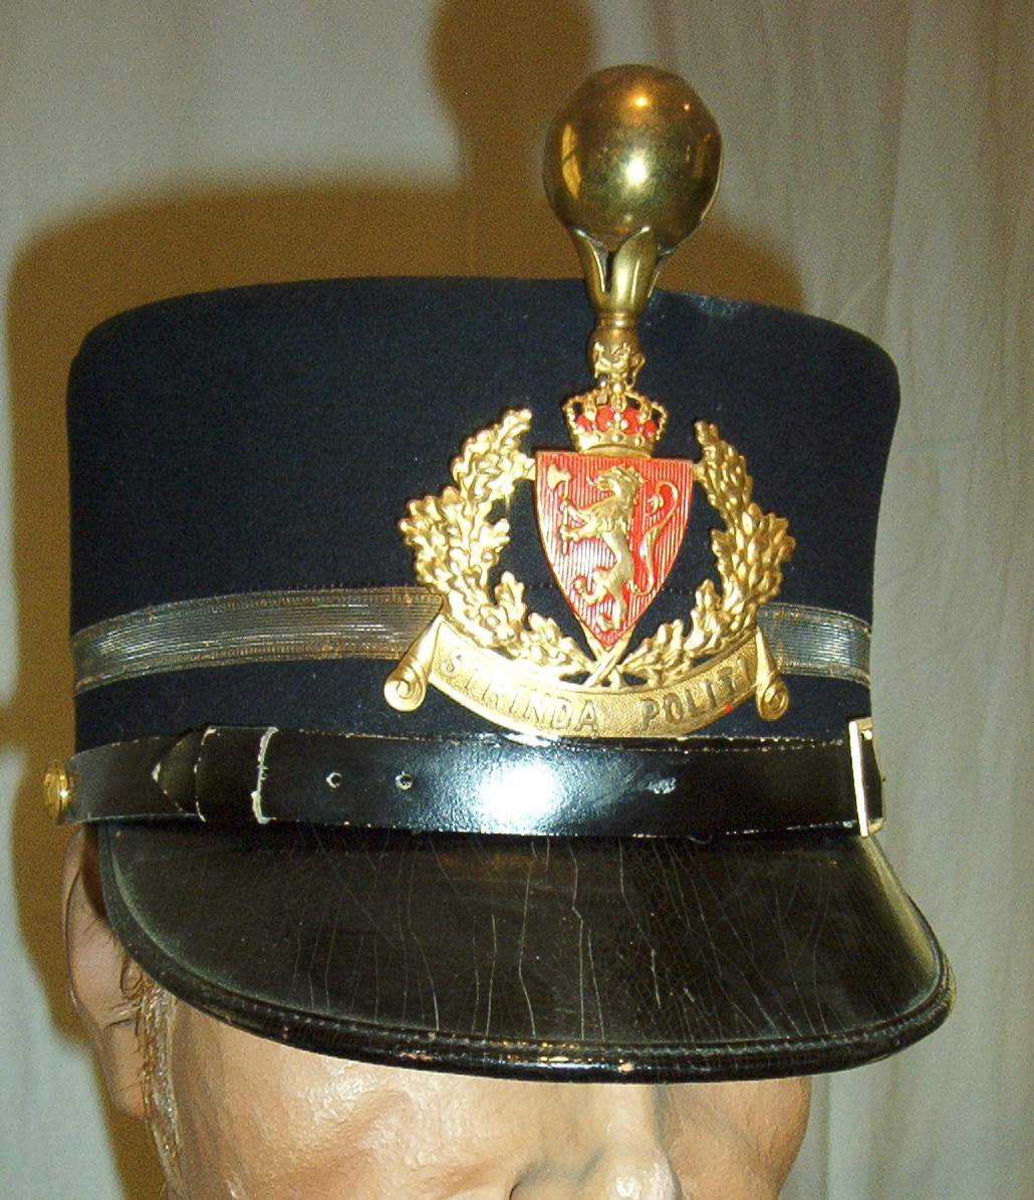 Uniformslue modell 1907. Det står Strinda Politi på skiltet.